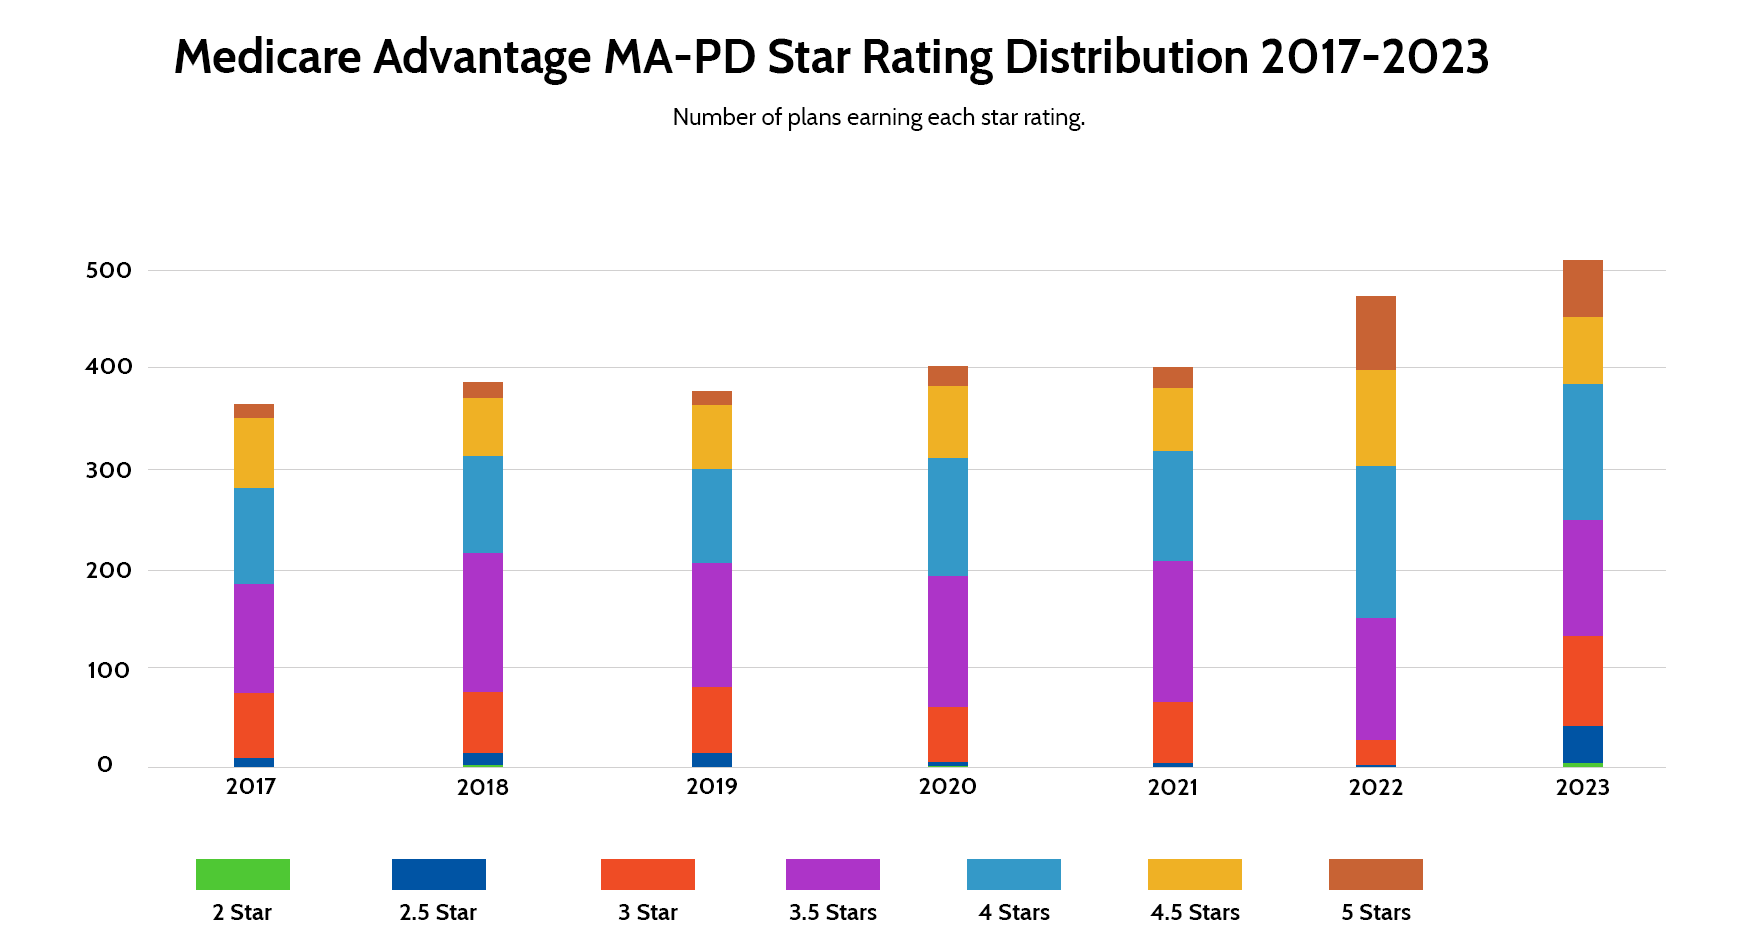 Overall Star Rating Distribution for 2023